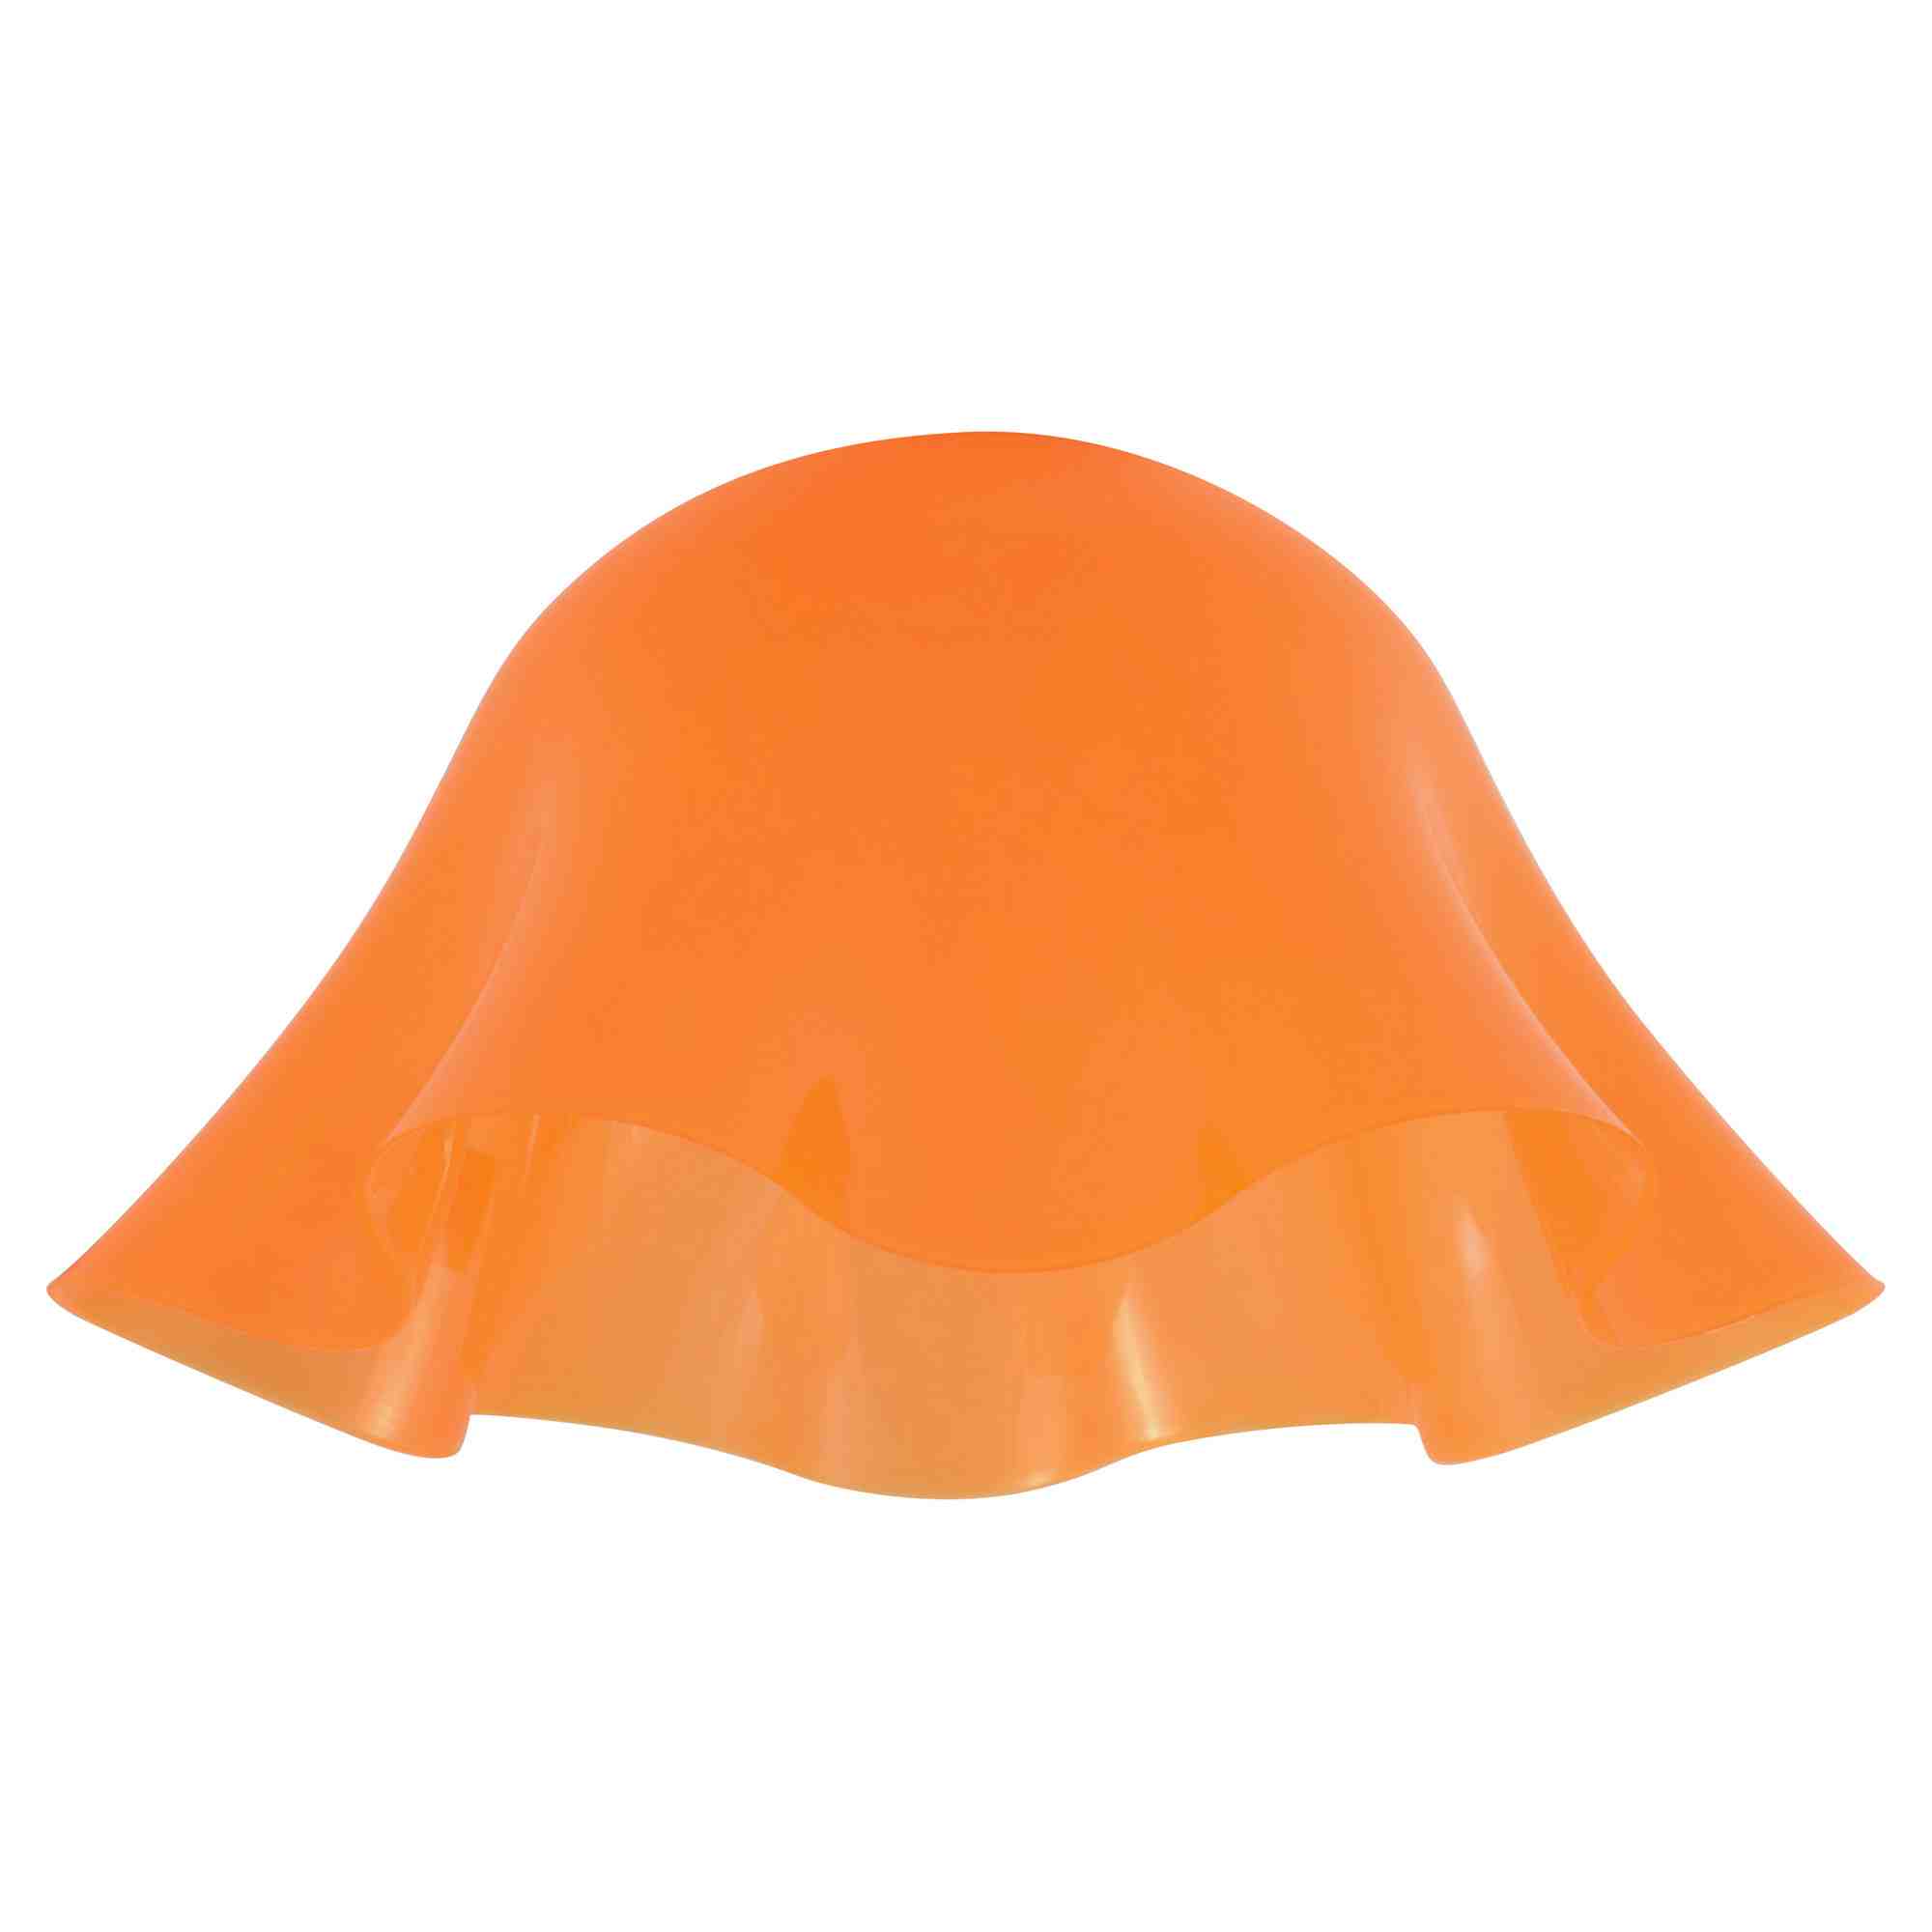 Плафон оранжевый, пластиковый, под патрон Е27, O280х140мм.16-37